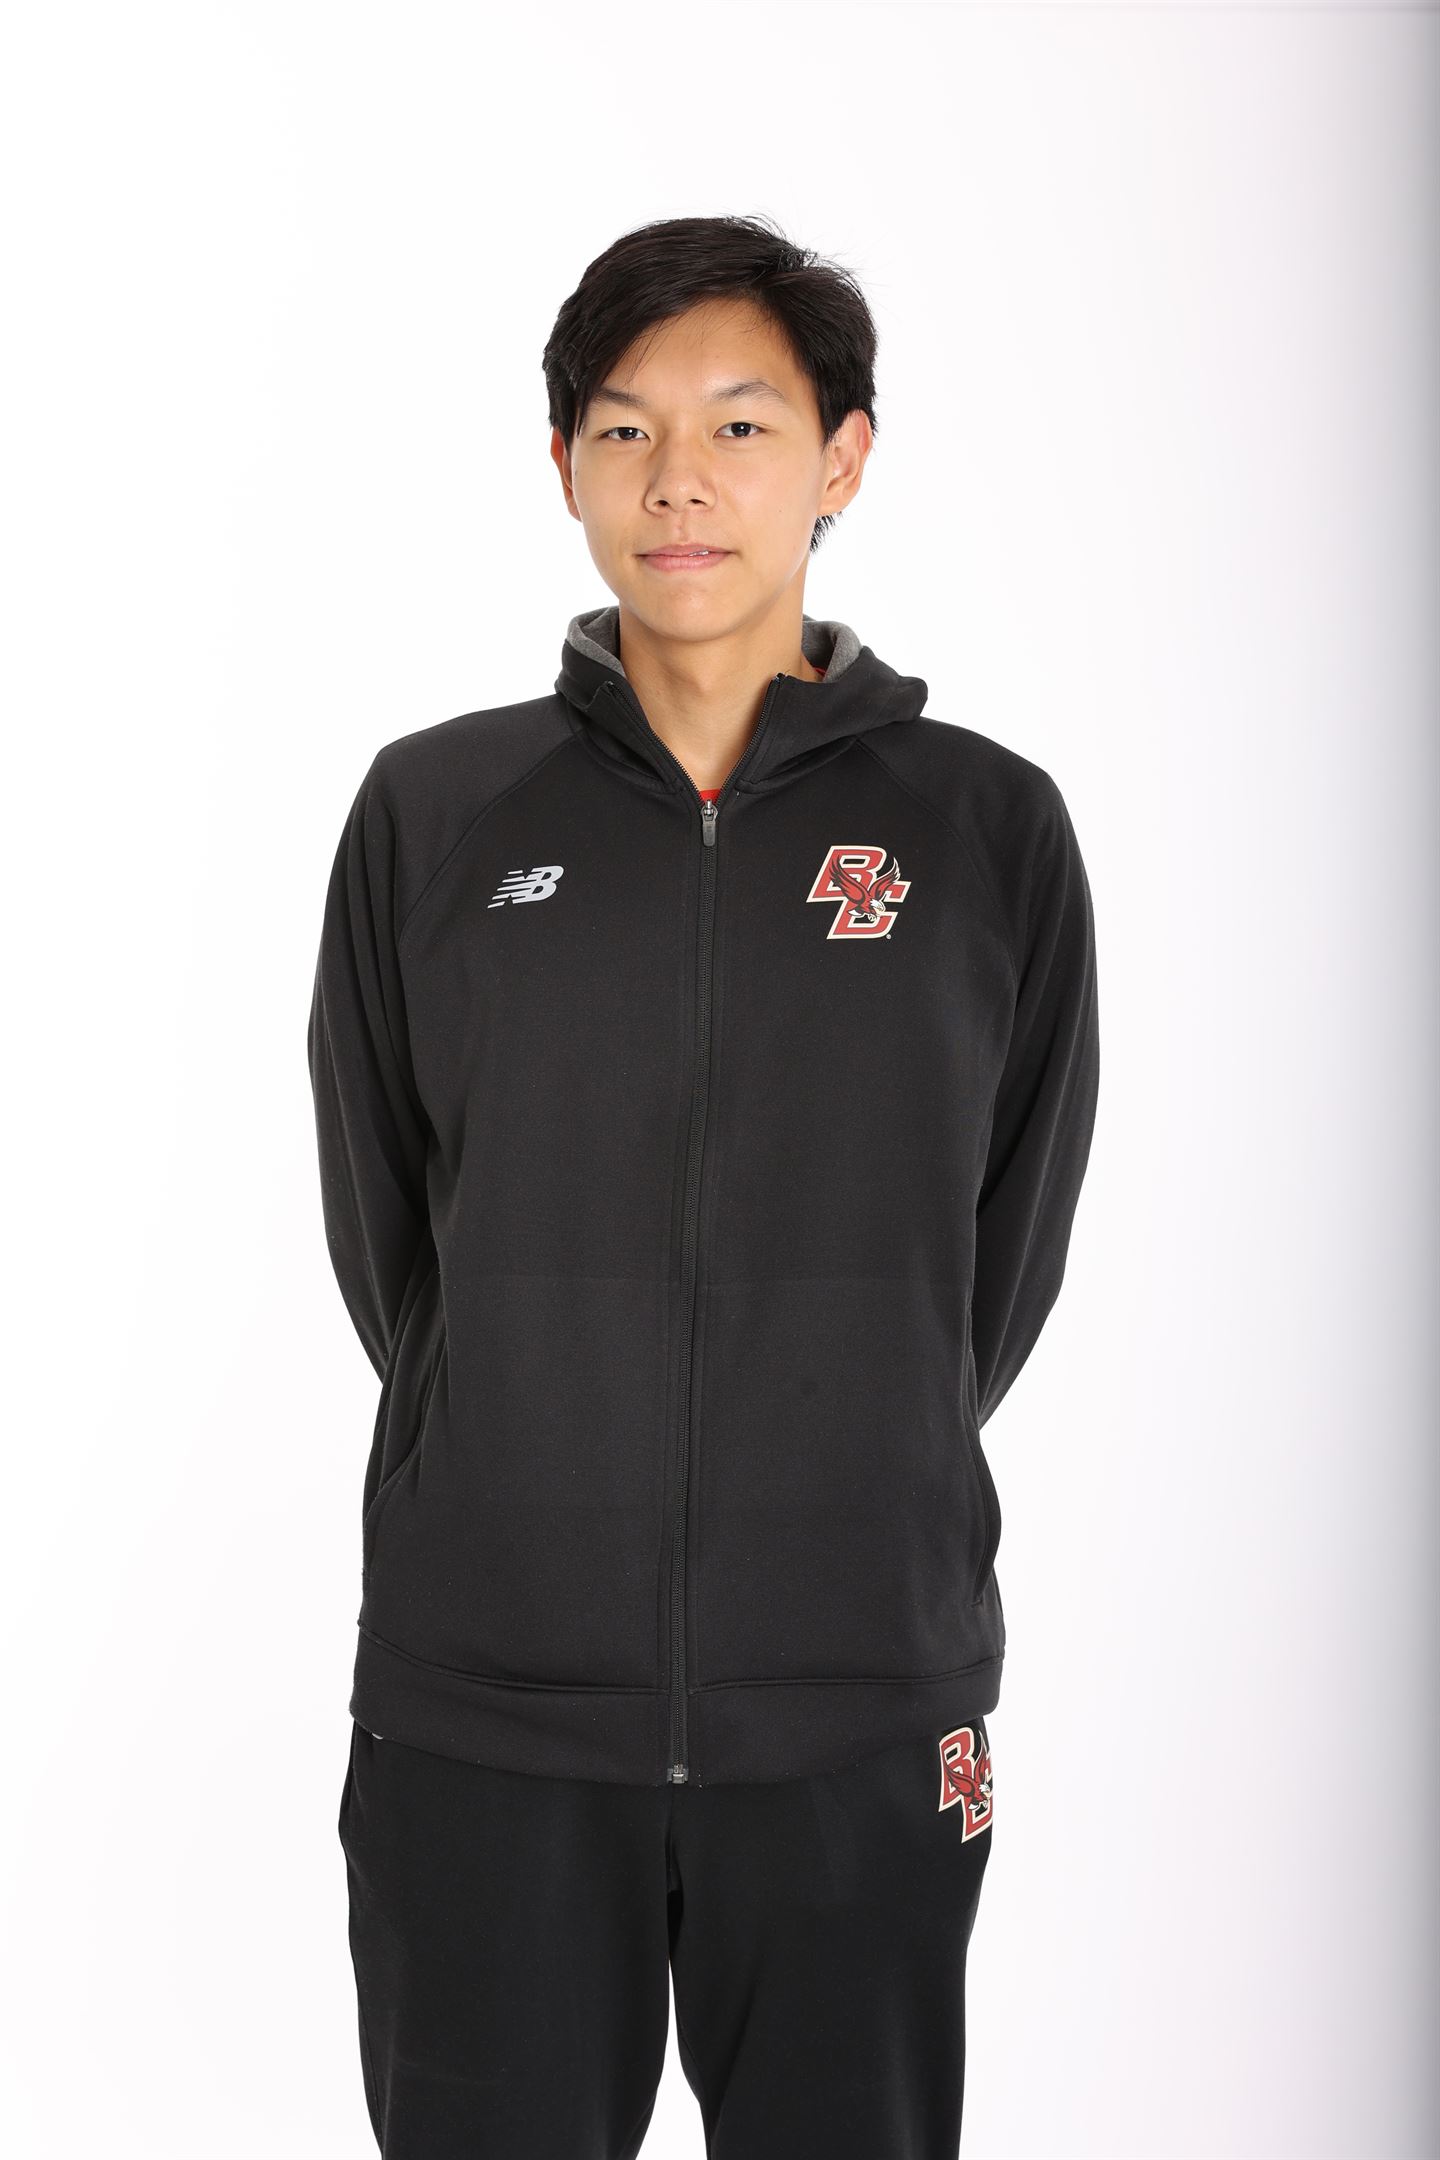 Adam Yang athlete profile head shot